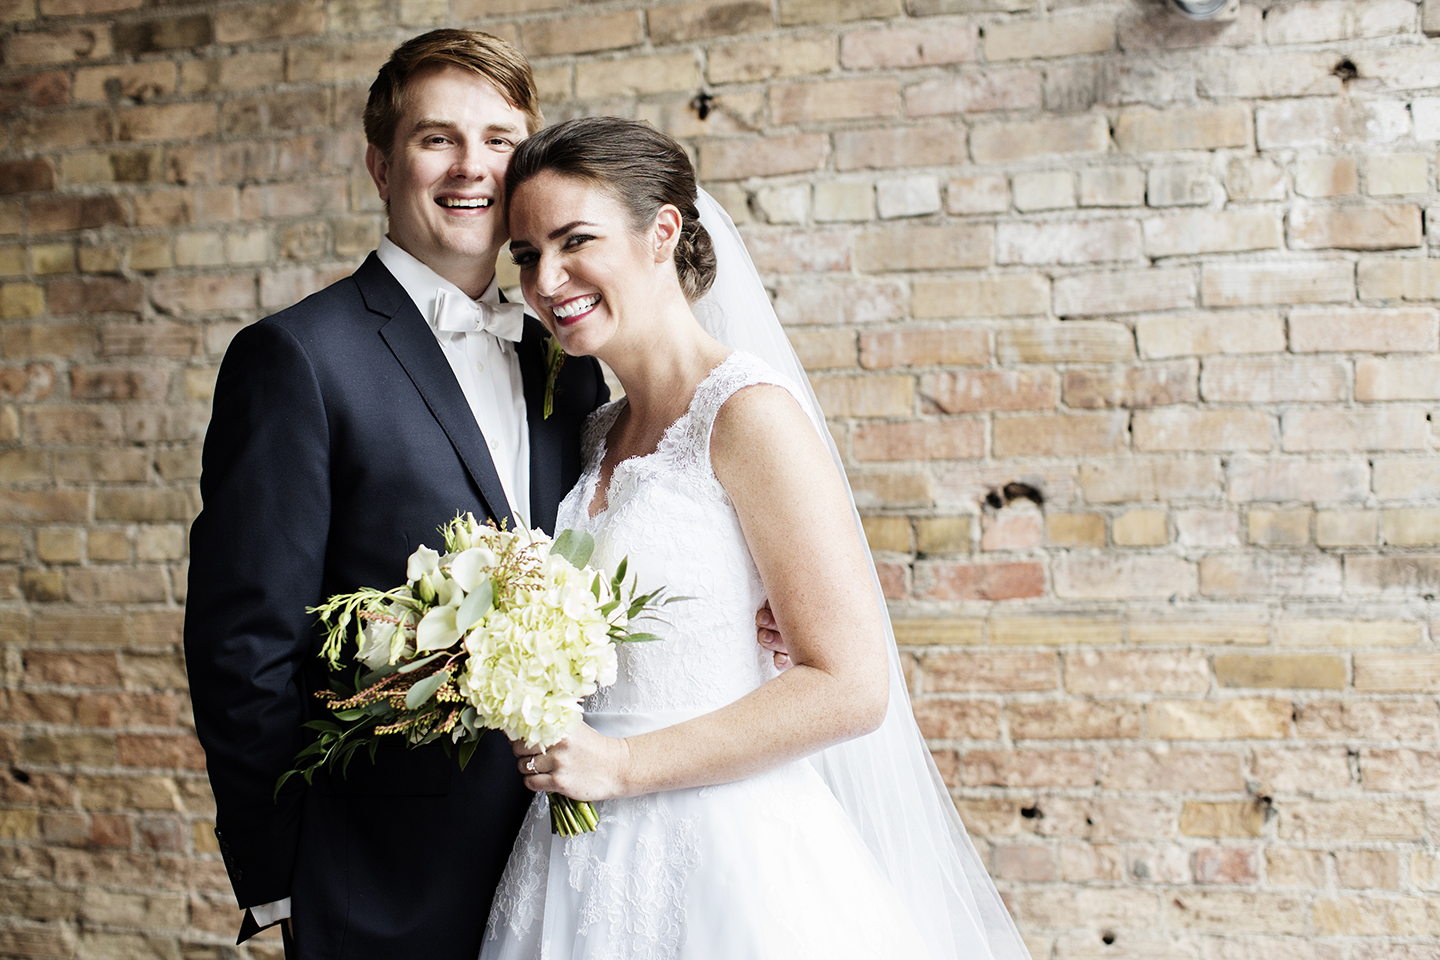 The Loring Social Wedding Photos | Photography by Photogen Inc. | Eliesa Johnson | Based in Minneapolis, Minnesota